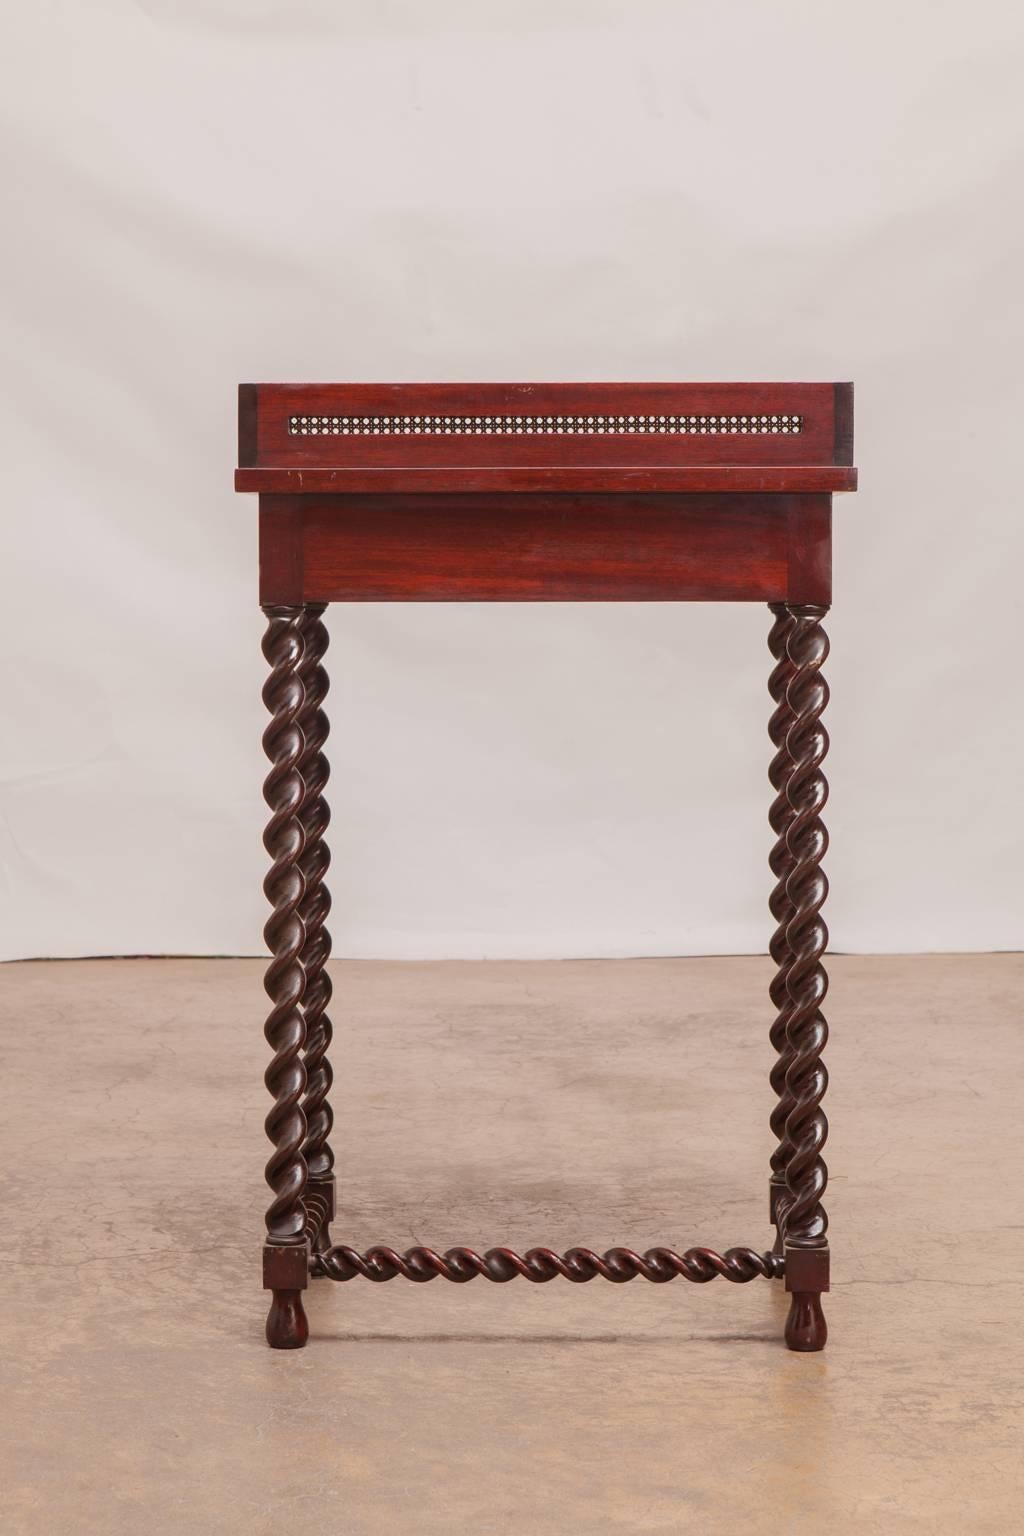 American 19th Century Mahogany Telephone Table with Barley Twist Legs